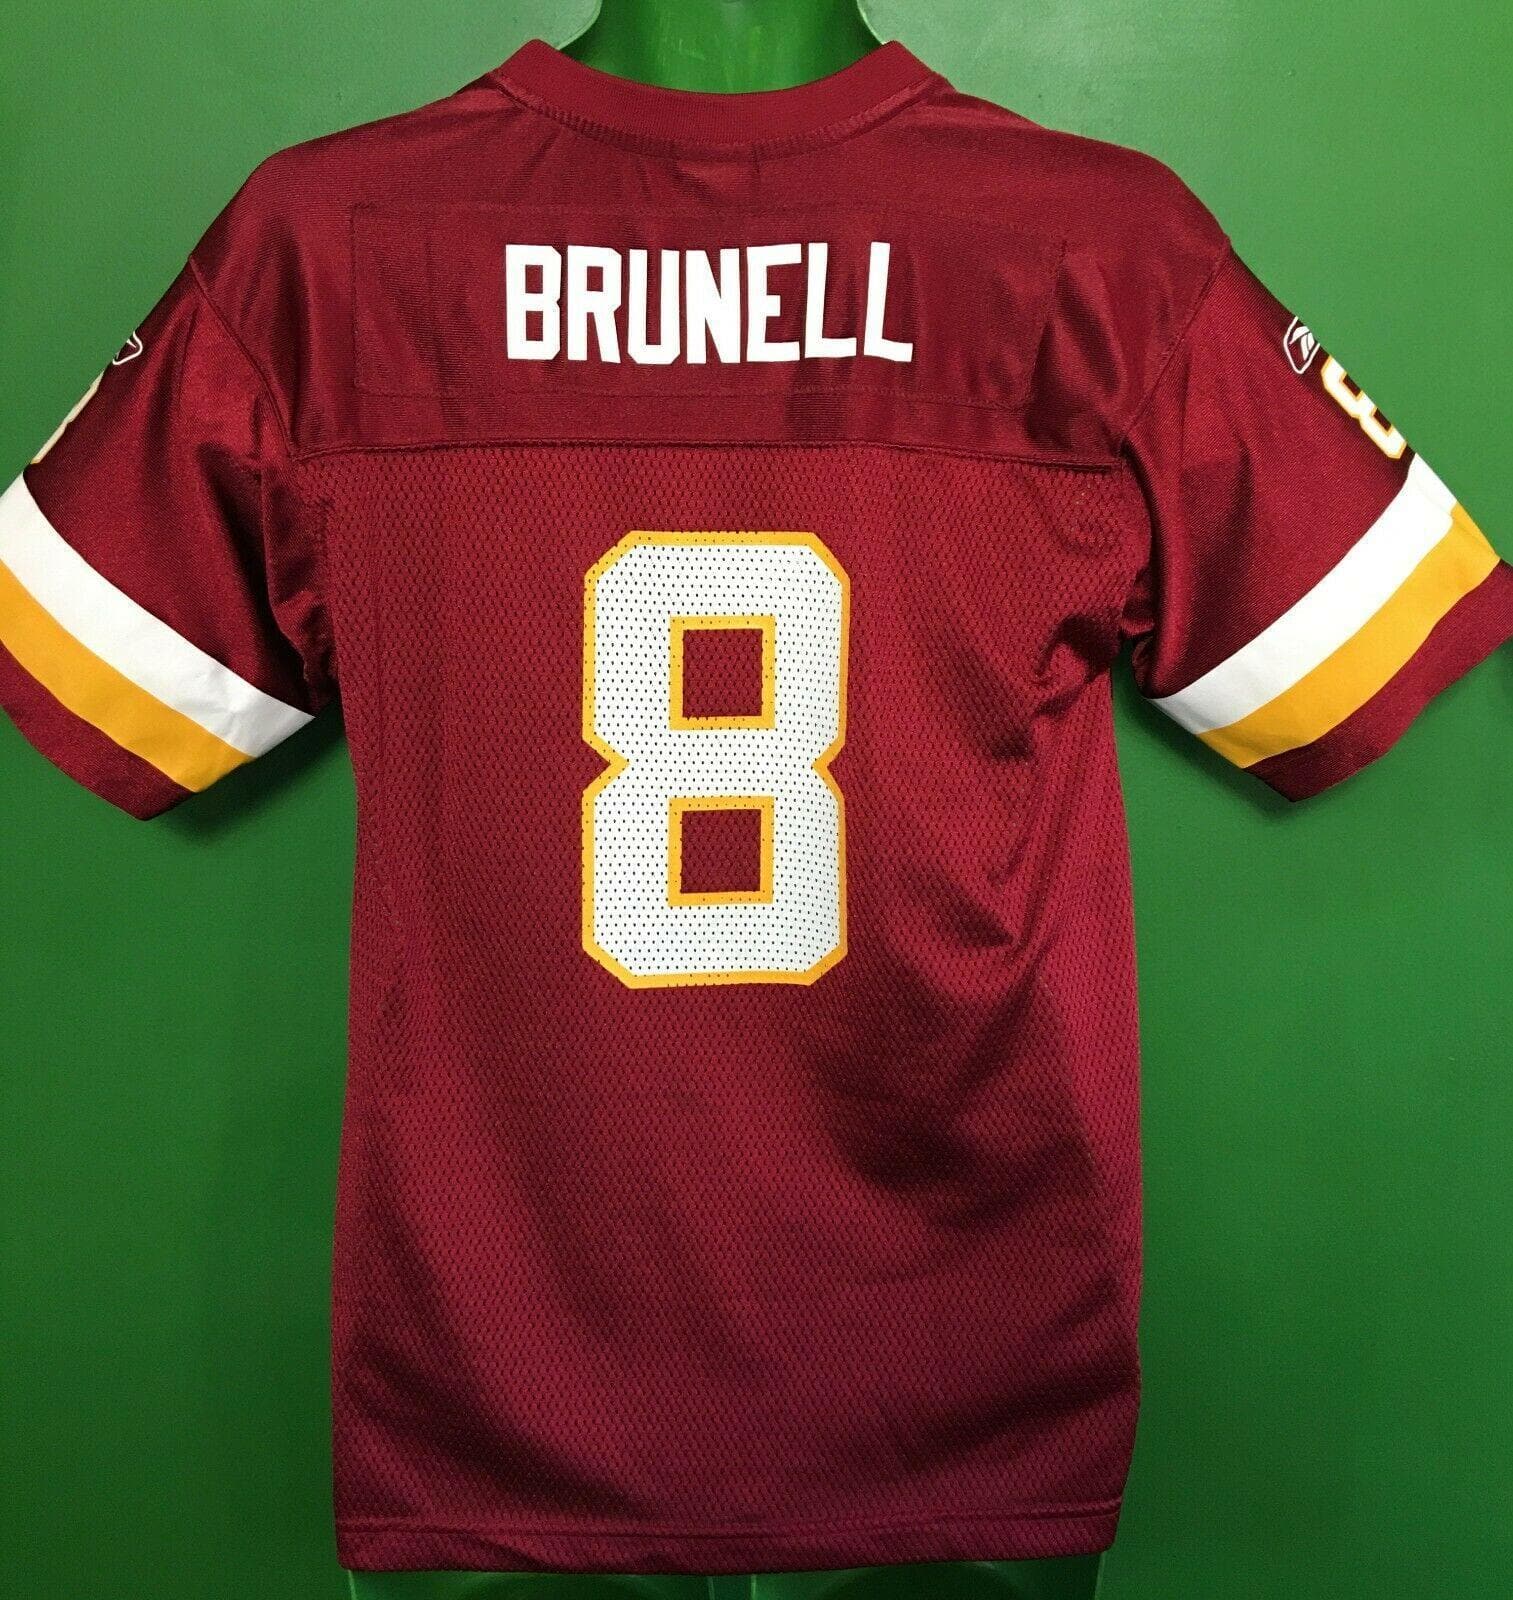 NFL Washington Commanders (Redskins) Mark Brunell #8 Jersey Youth Large 14-16